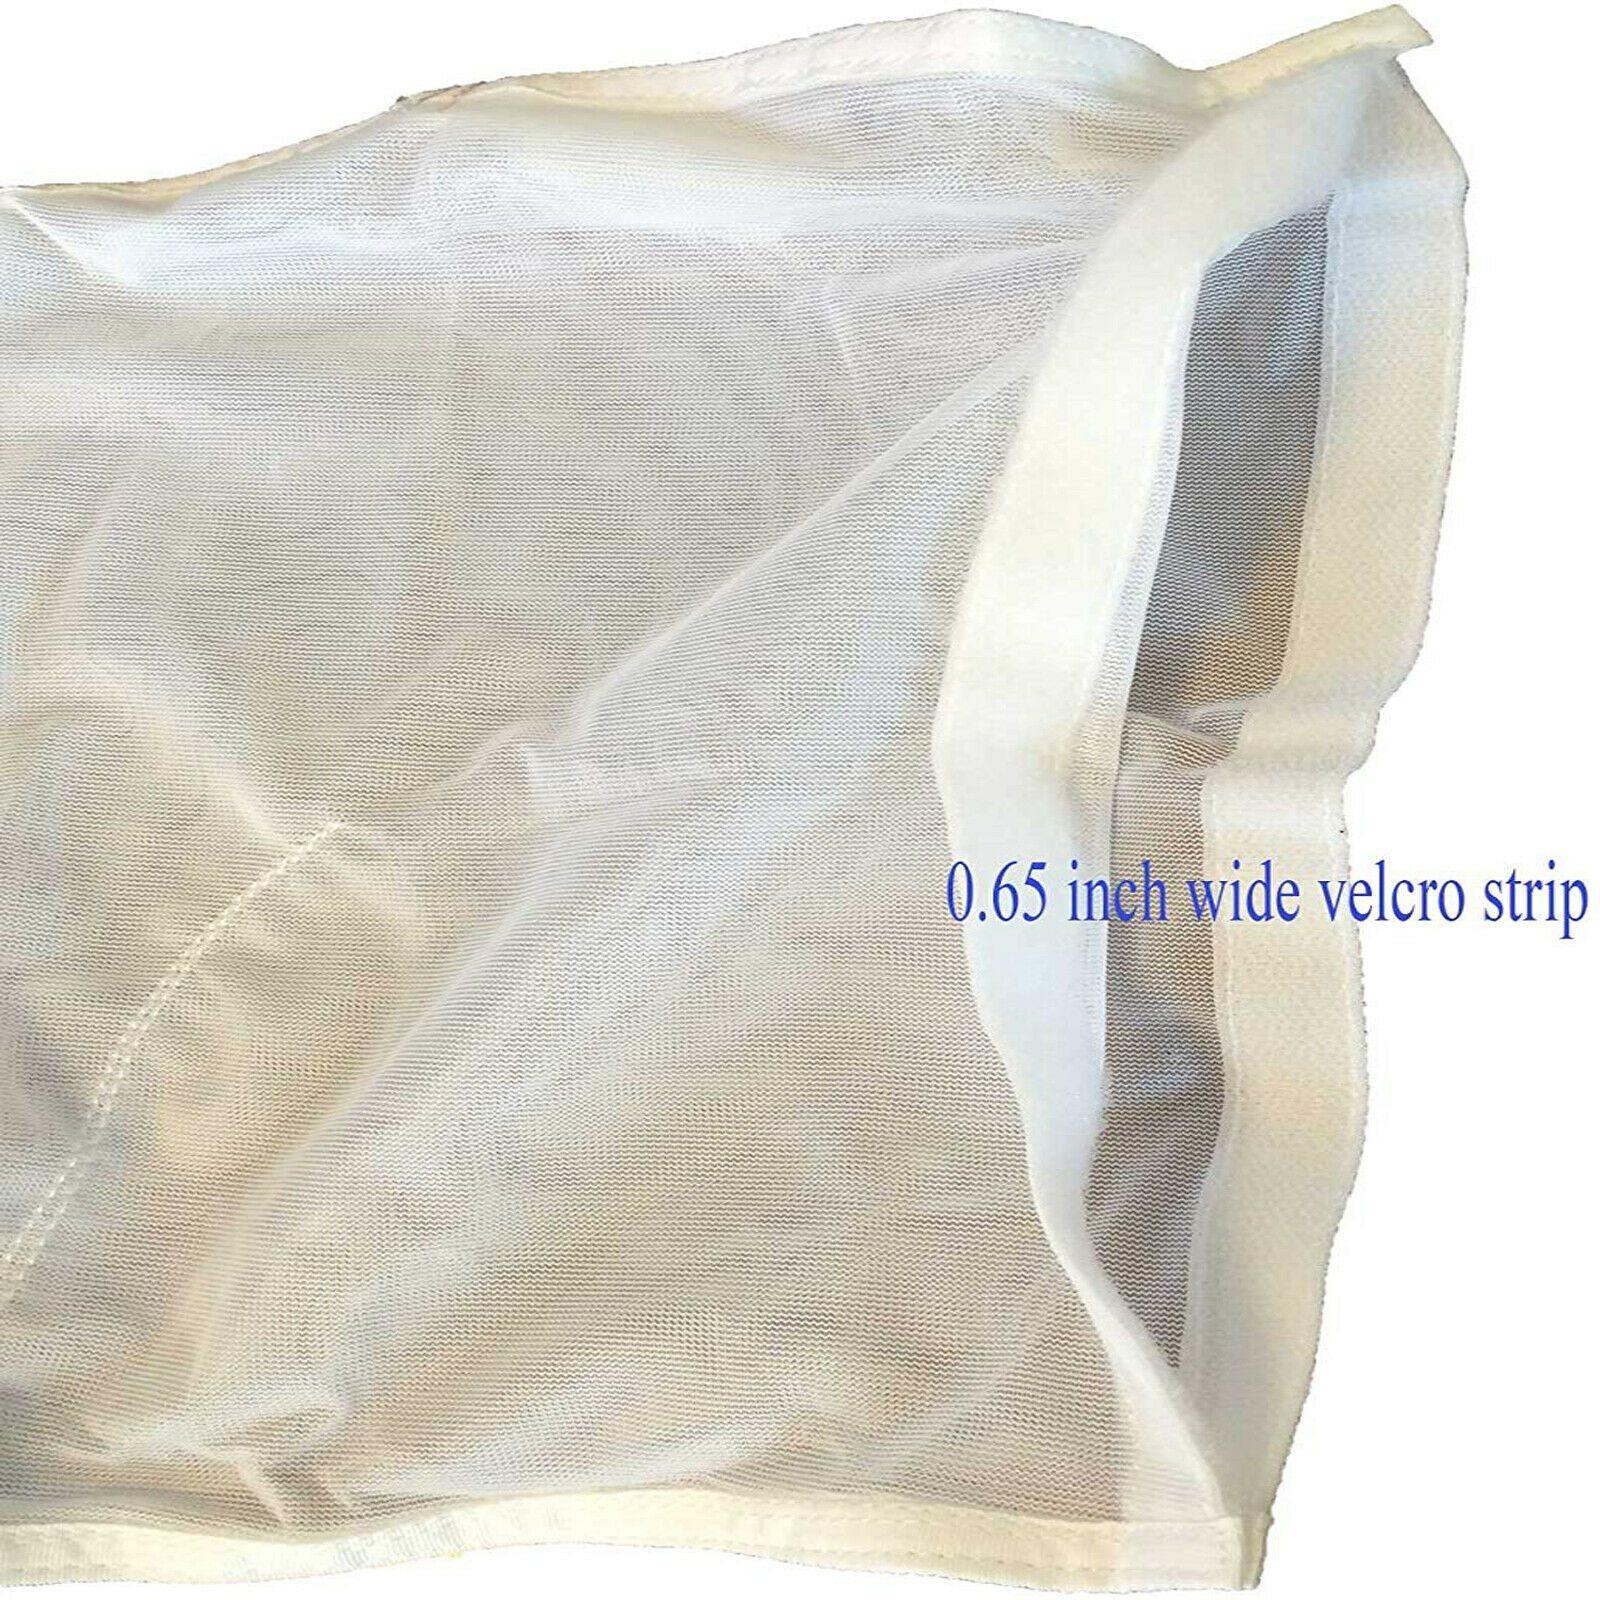 For Polaris 280 480 W7230105 Vacuum Cleaner VAC-SWEEP Swimming Pool Zipper Bag Sparesbarn